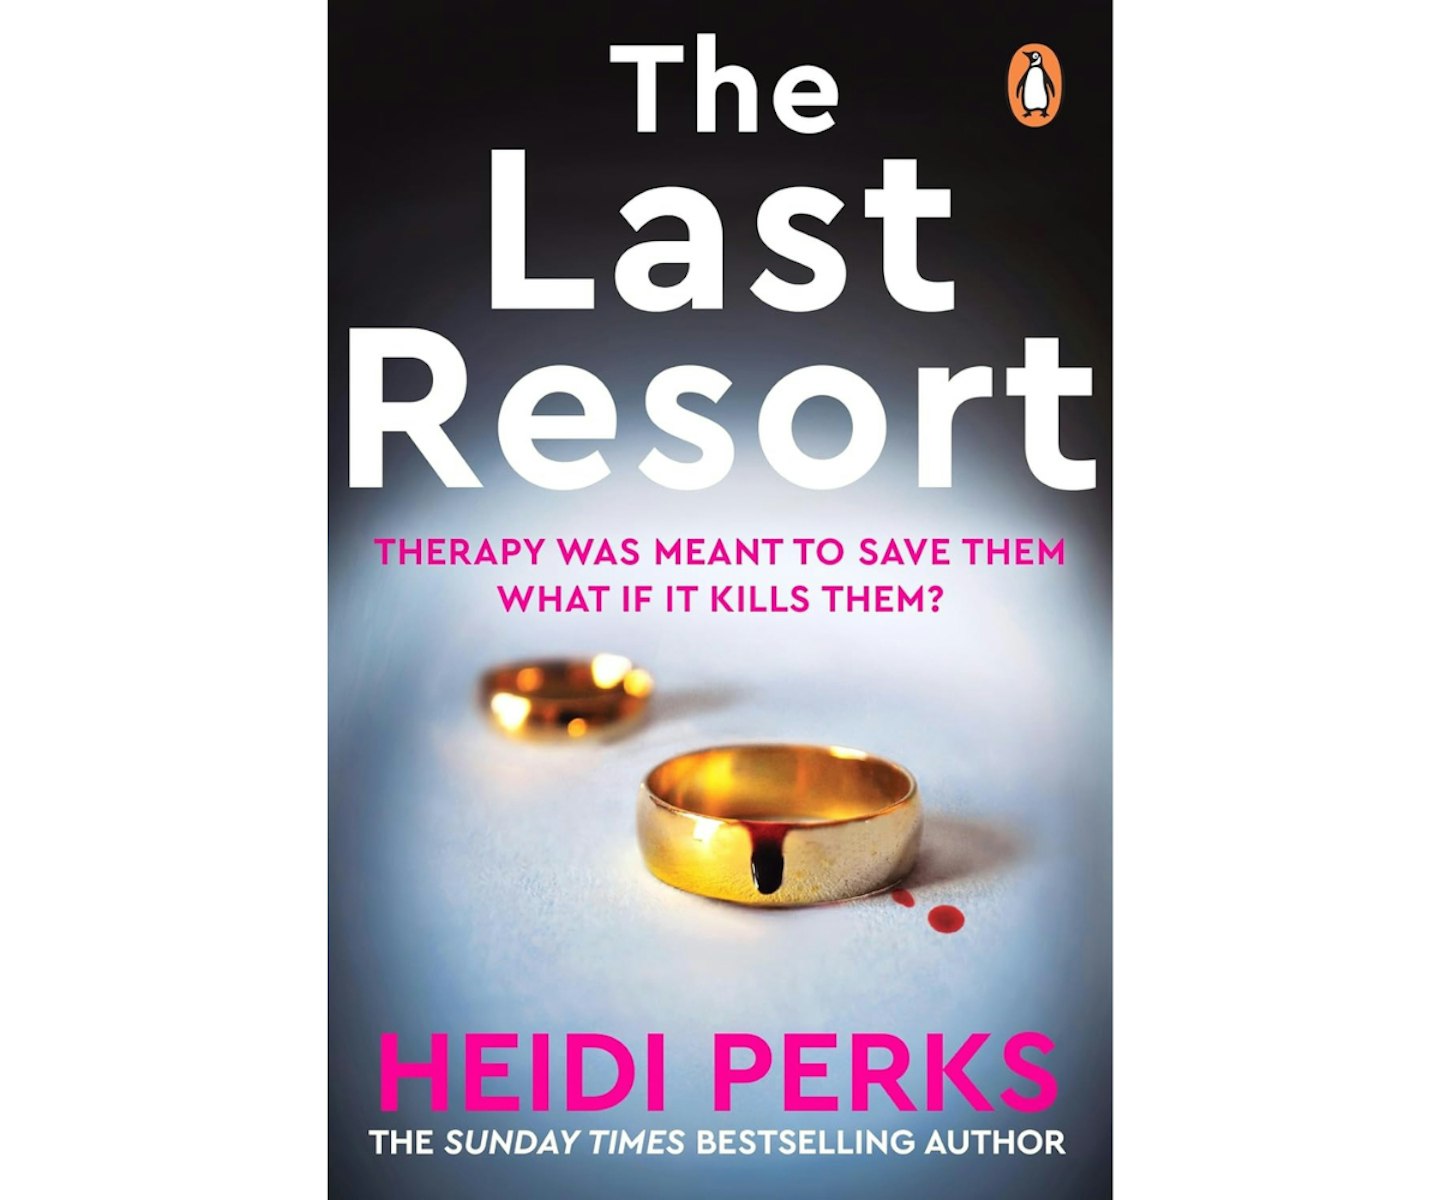 The Last Resort by Heidi Parks